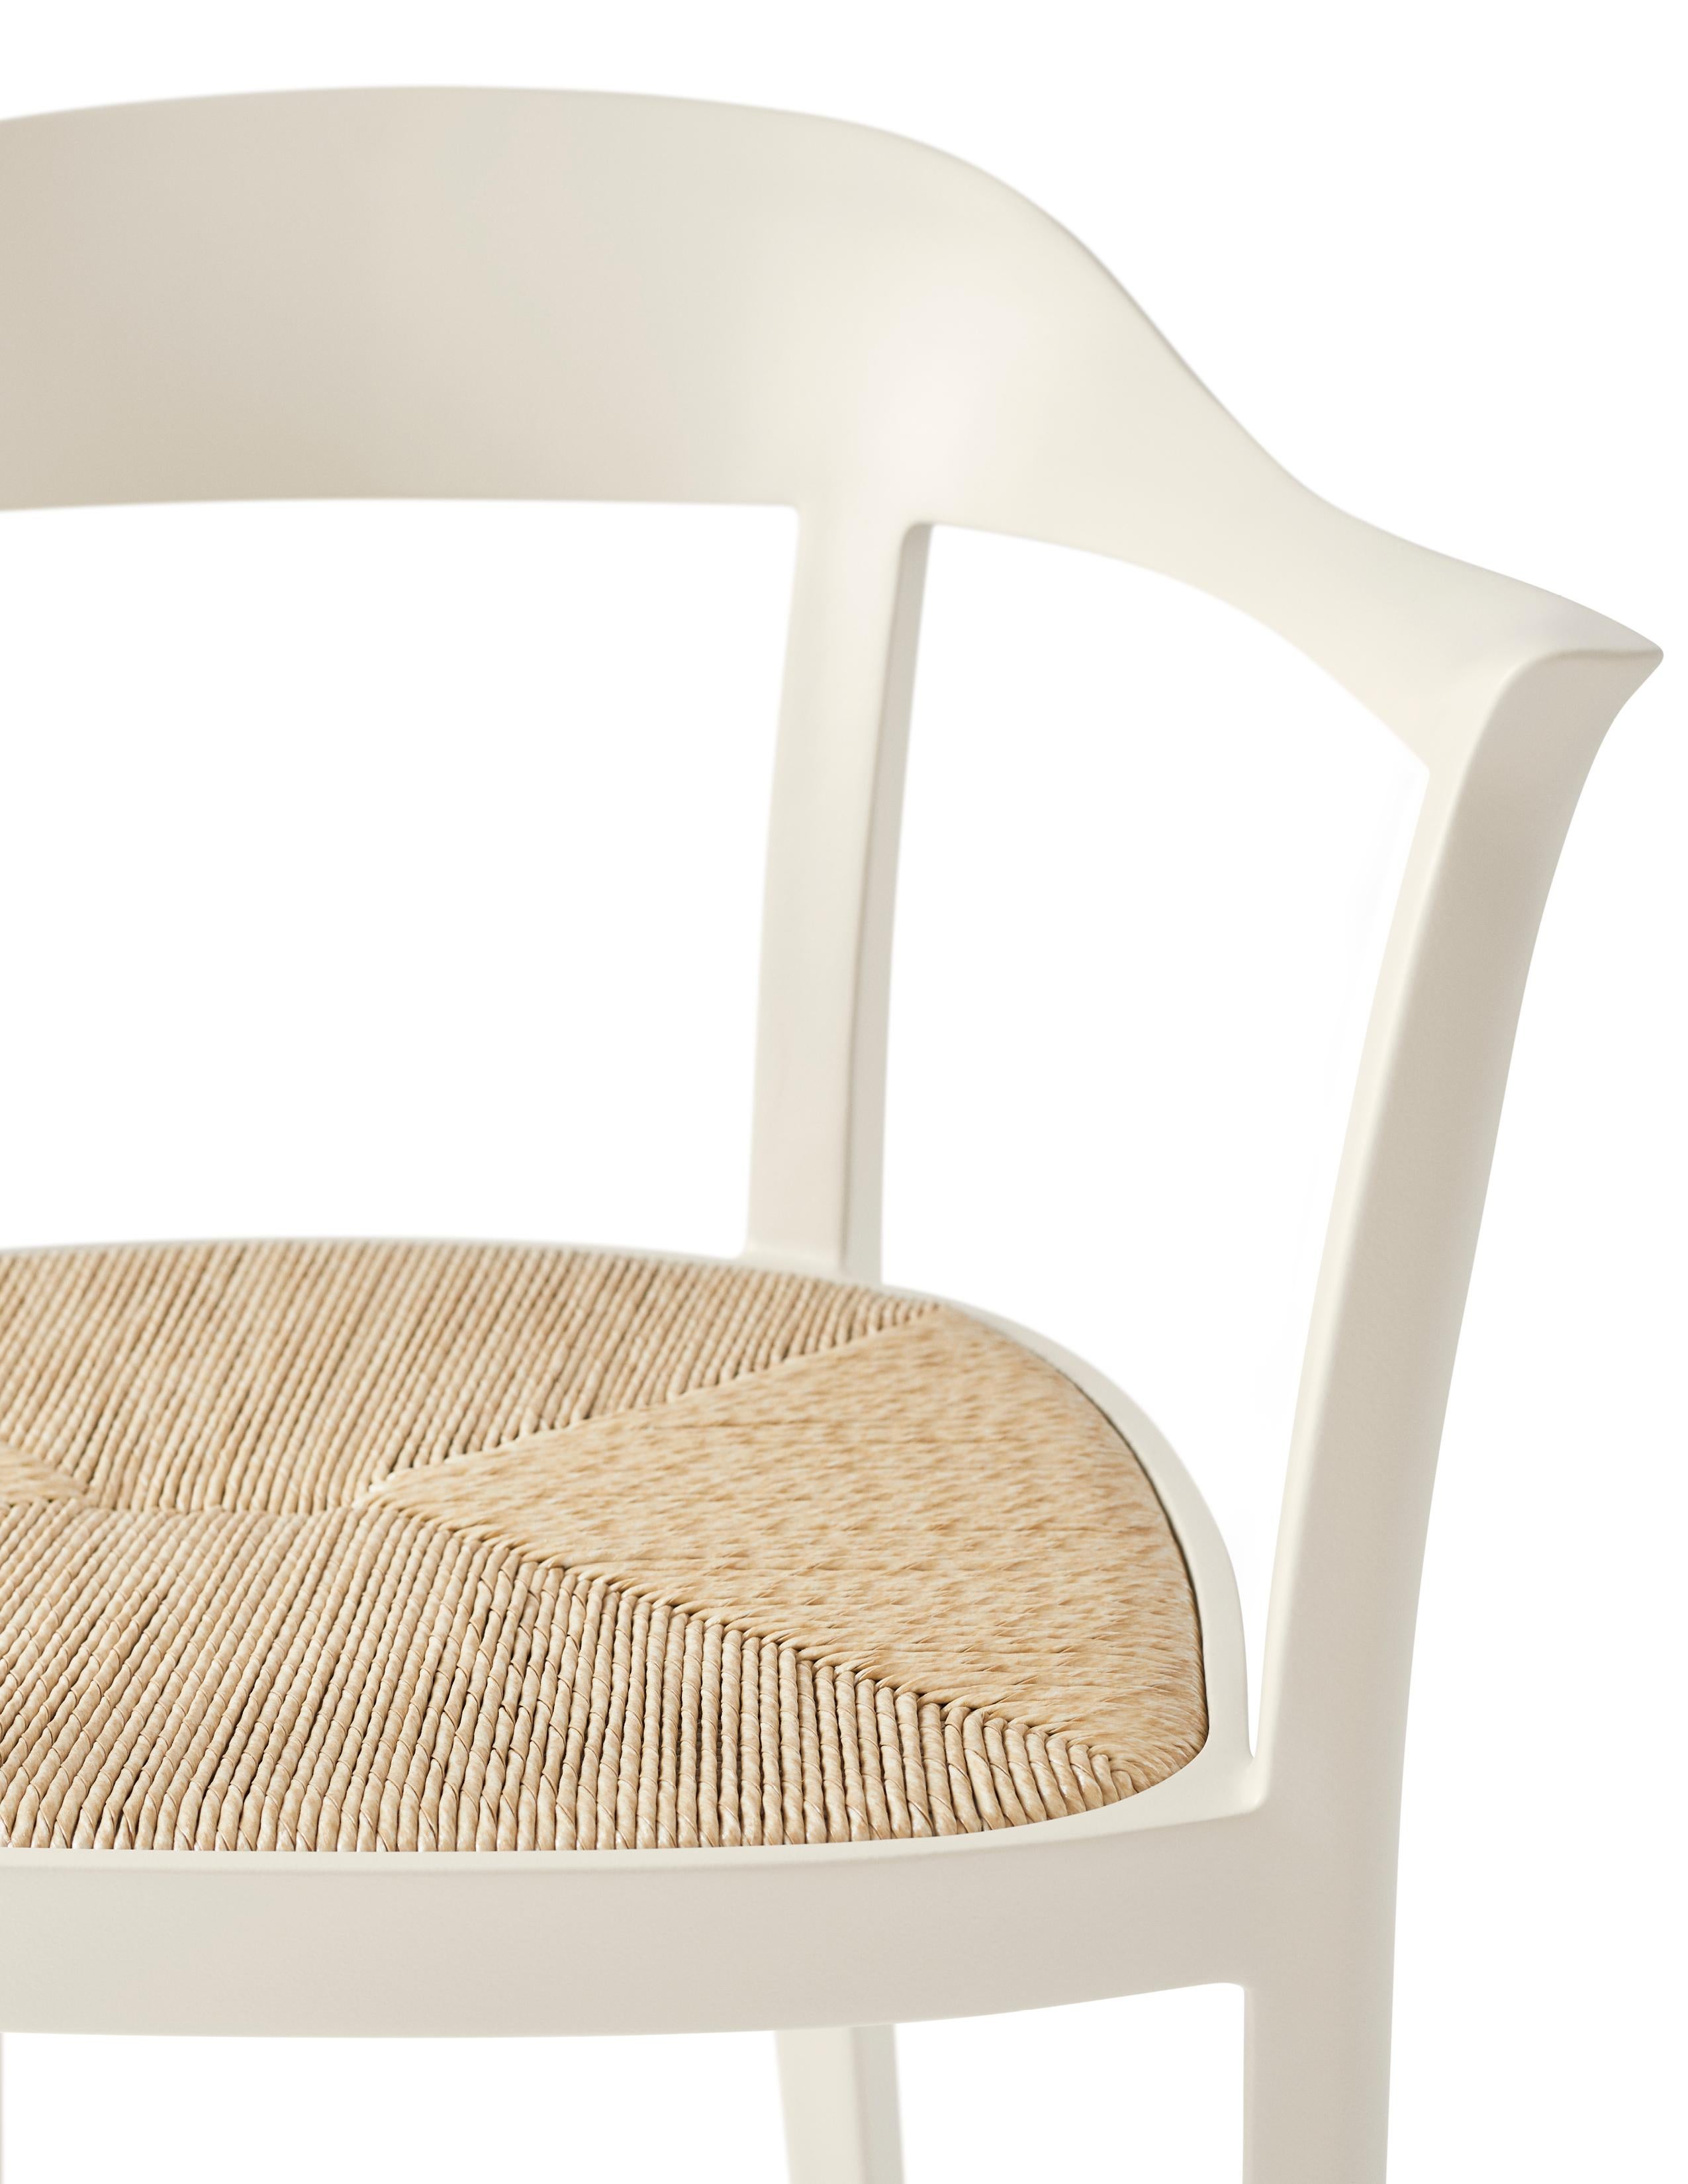 Chesapeake Dining Chair, Classic White, Woven Rush, Outdoor Garden Furniture 2